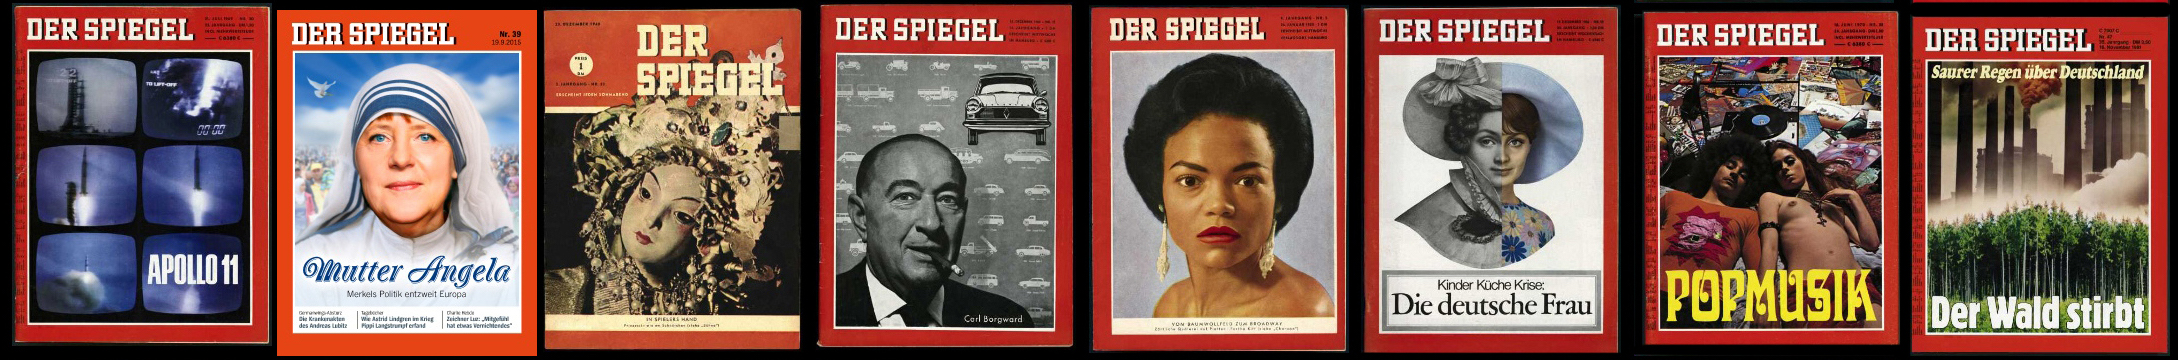 Spiegel Cover Gallery